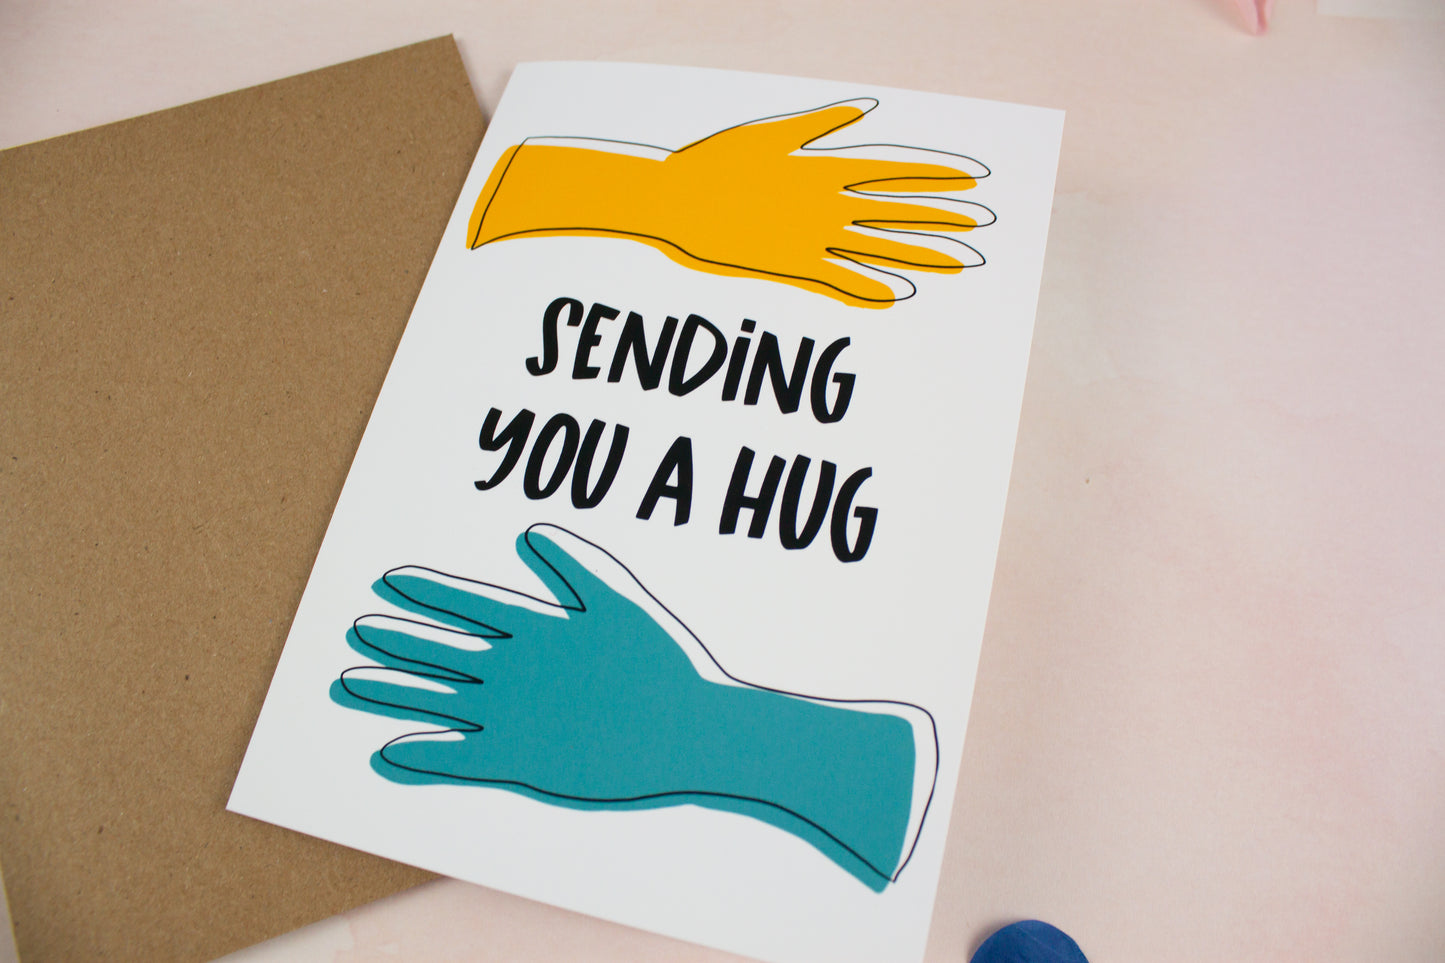 Sending You a Hug